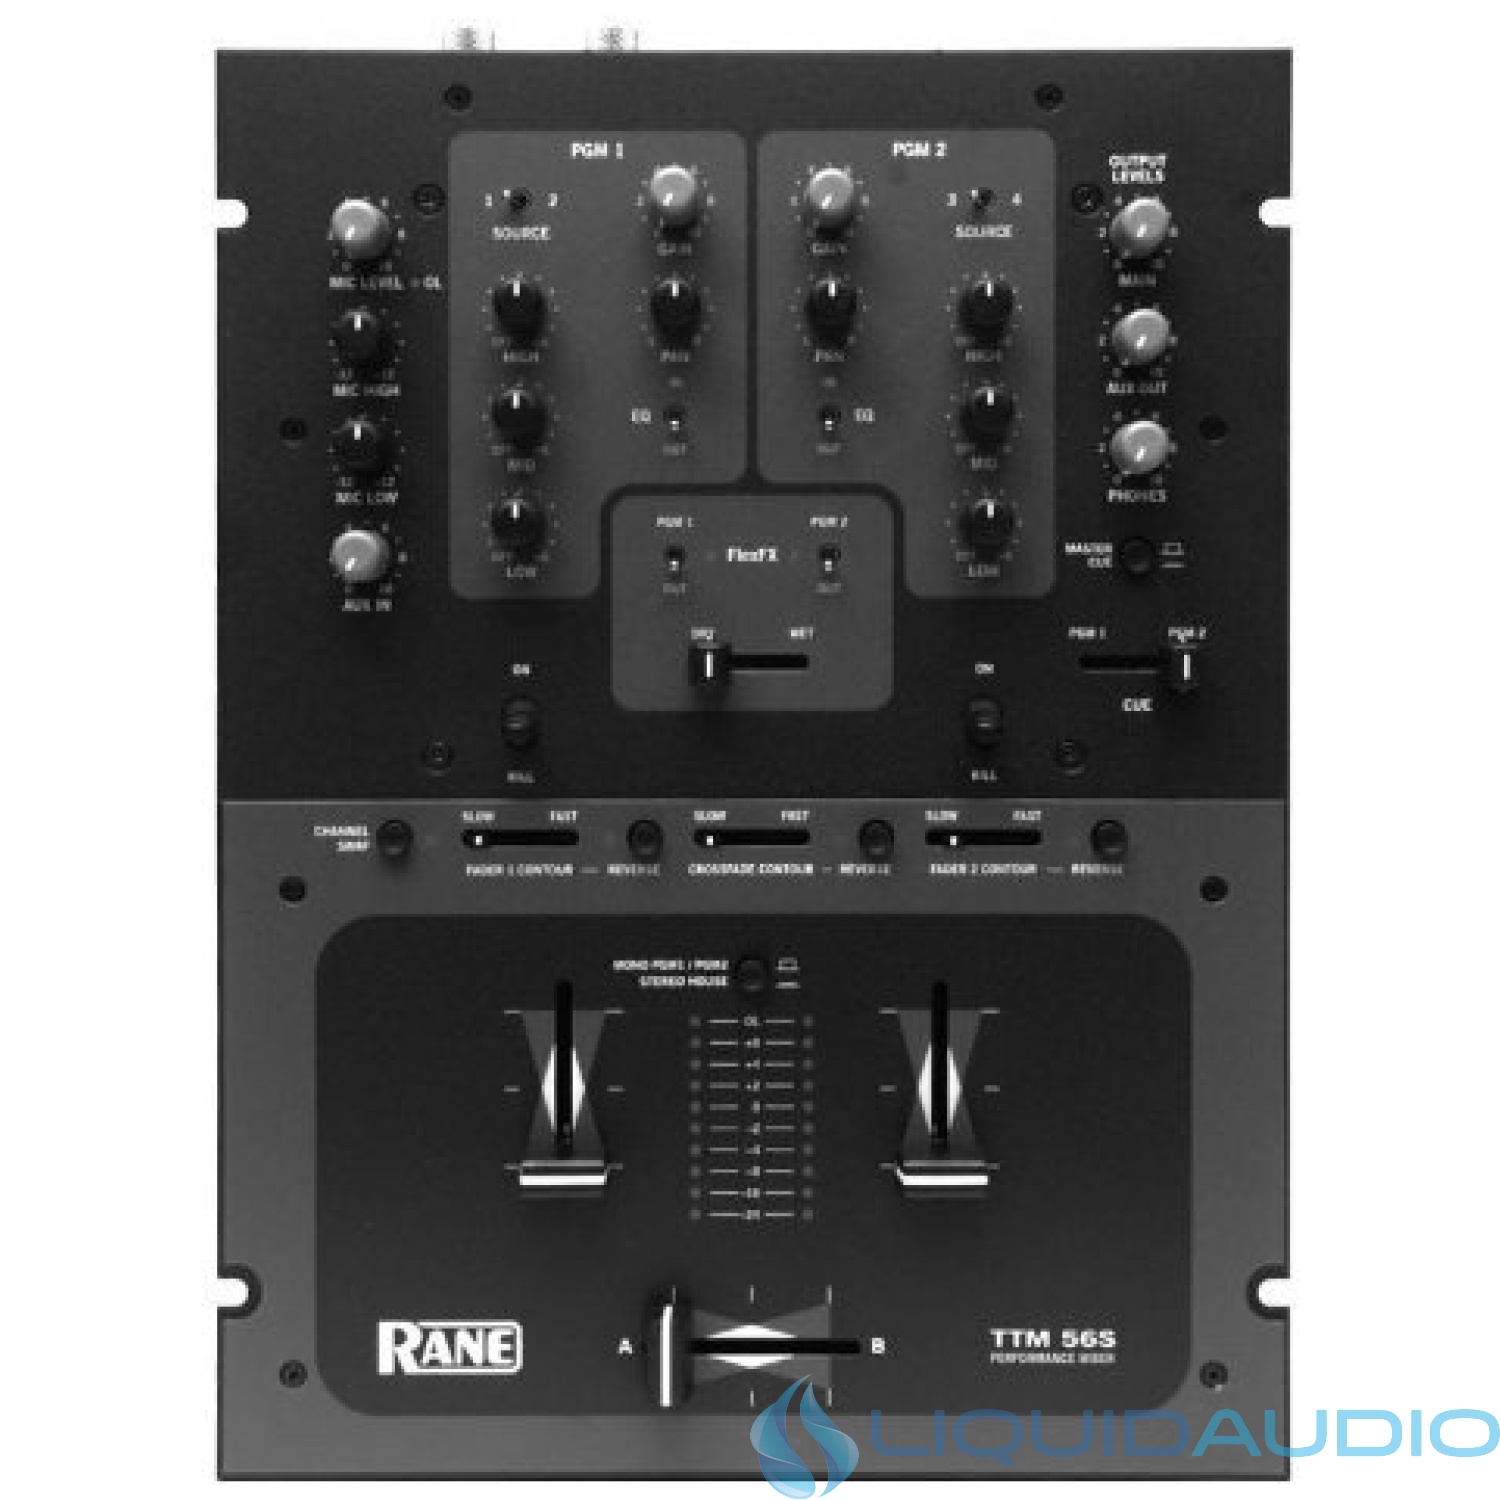 Rane TTM 56S 2-Channel DJ Mixer